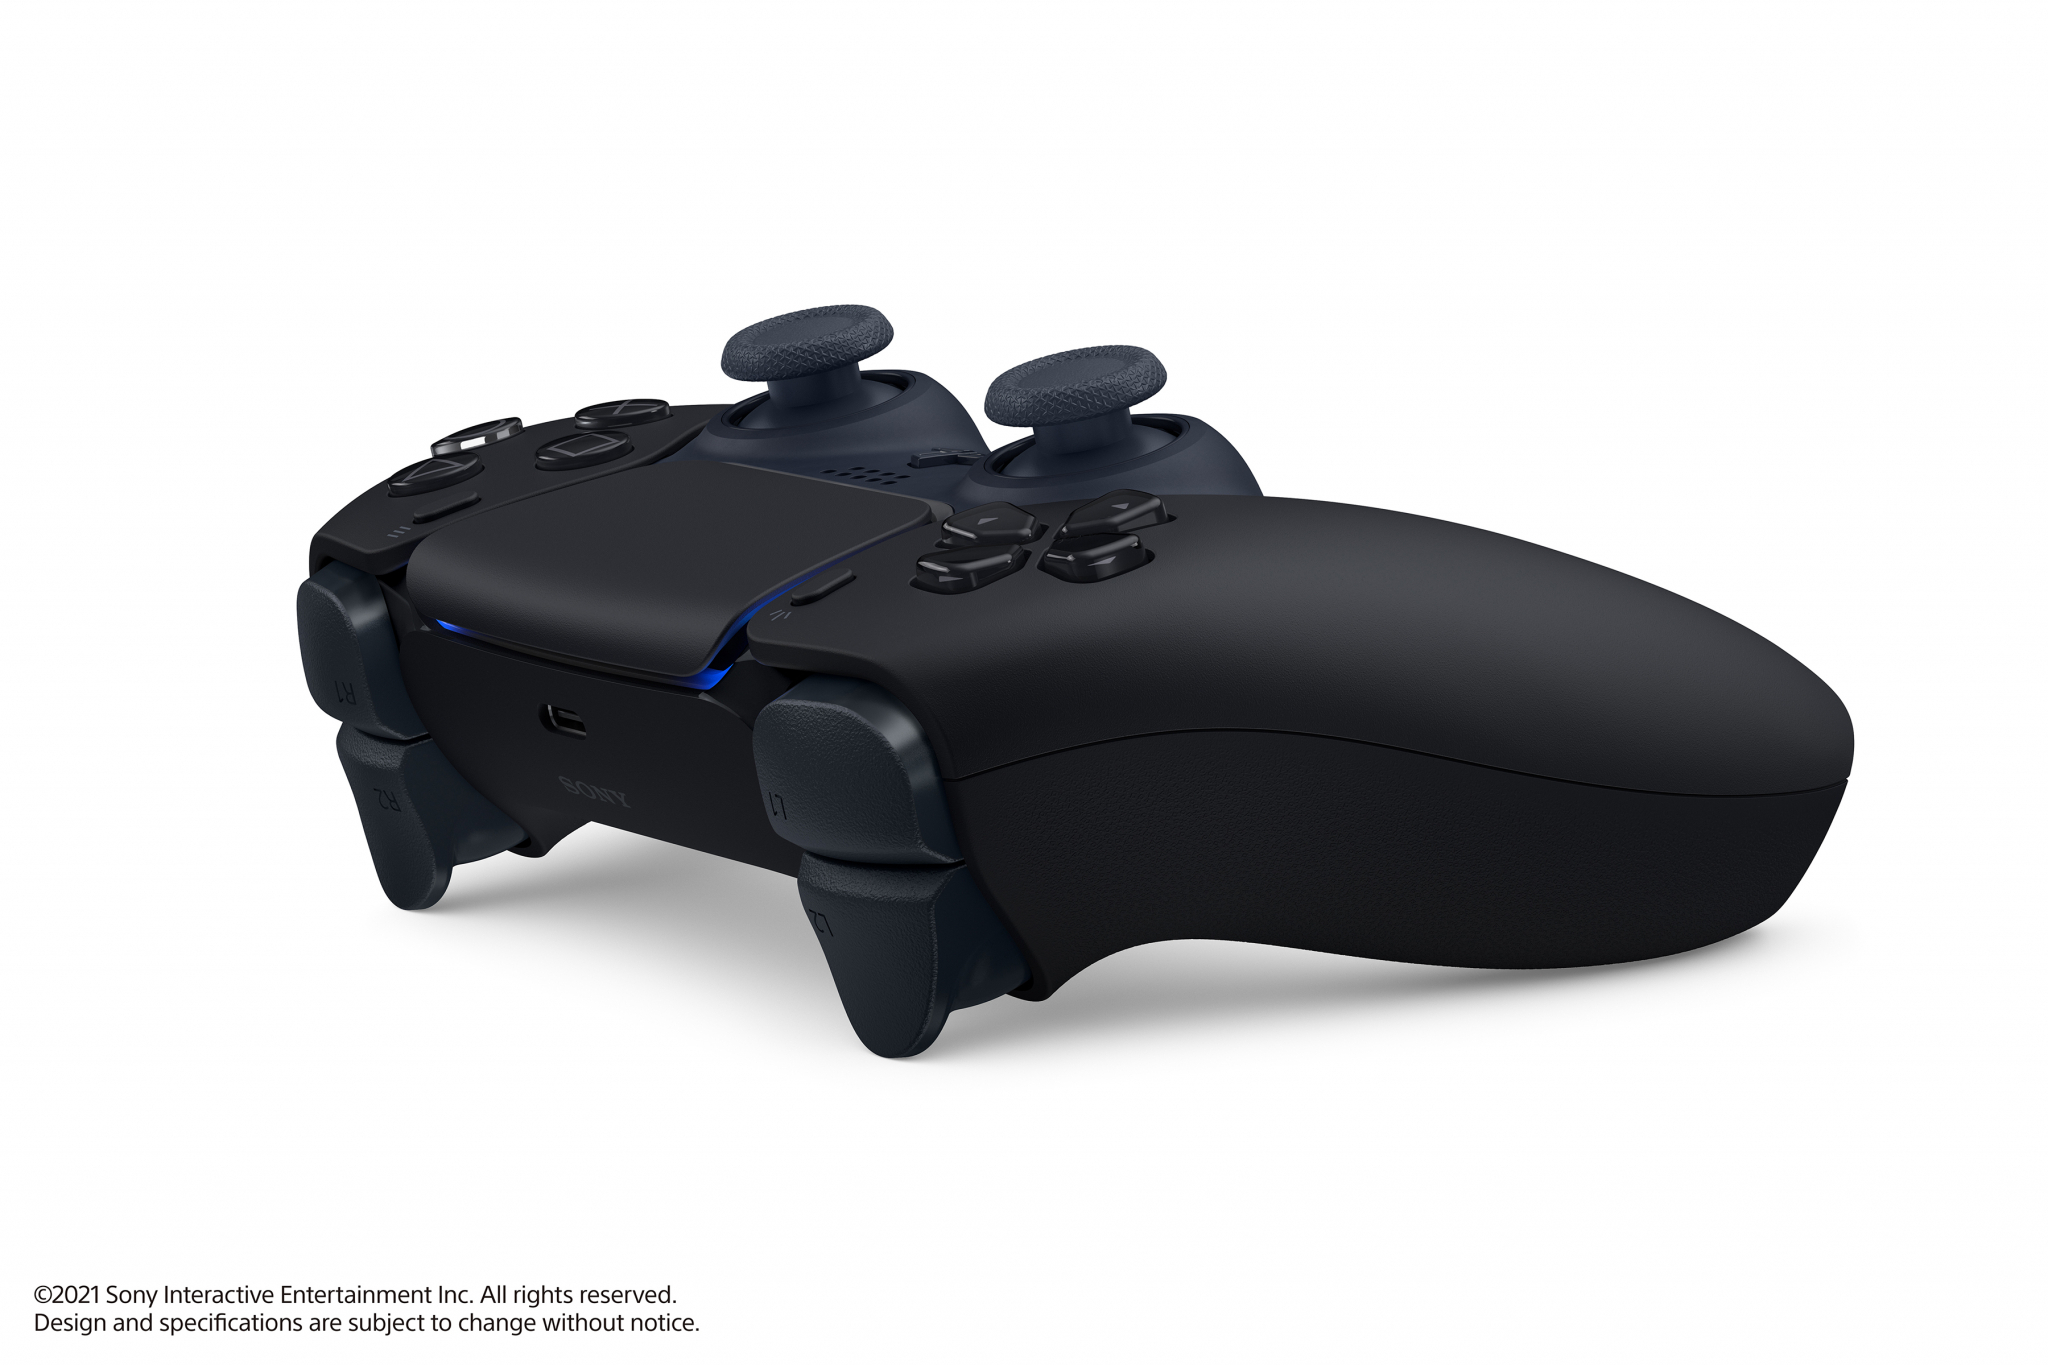 PS5 DualSense Draadloze Controller - Zwart